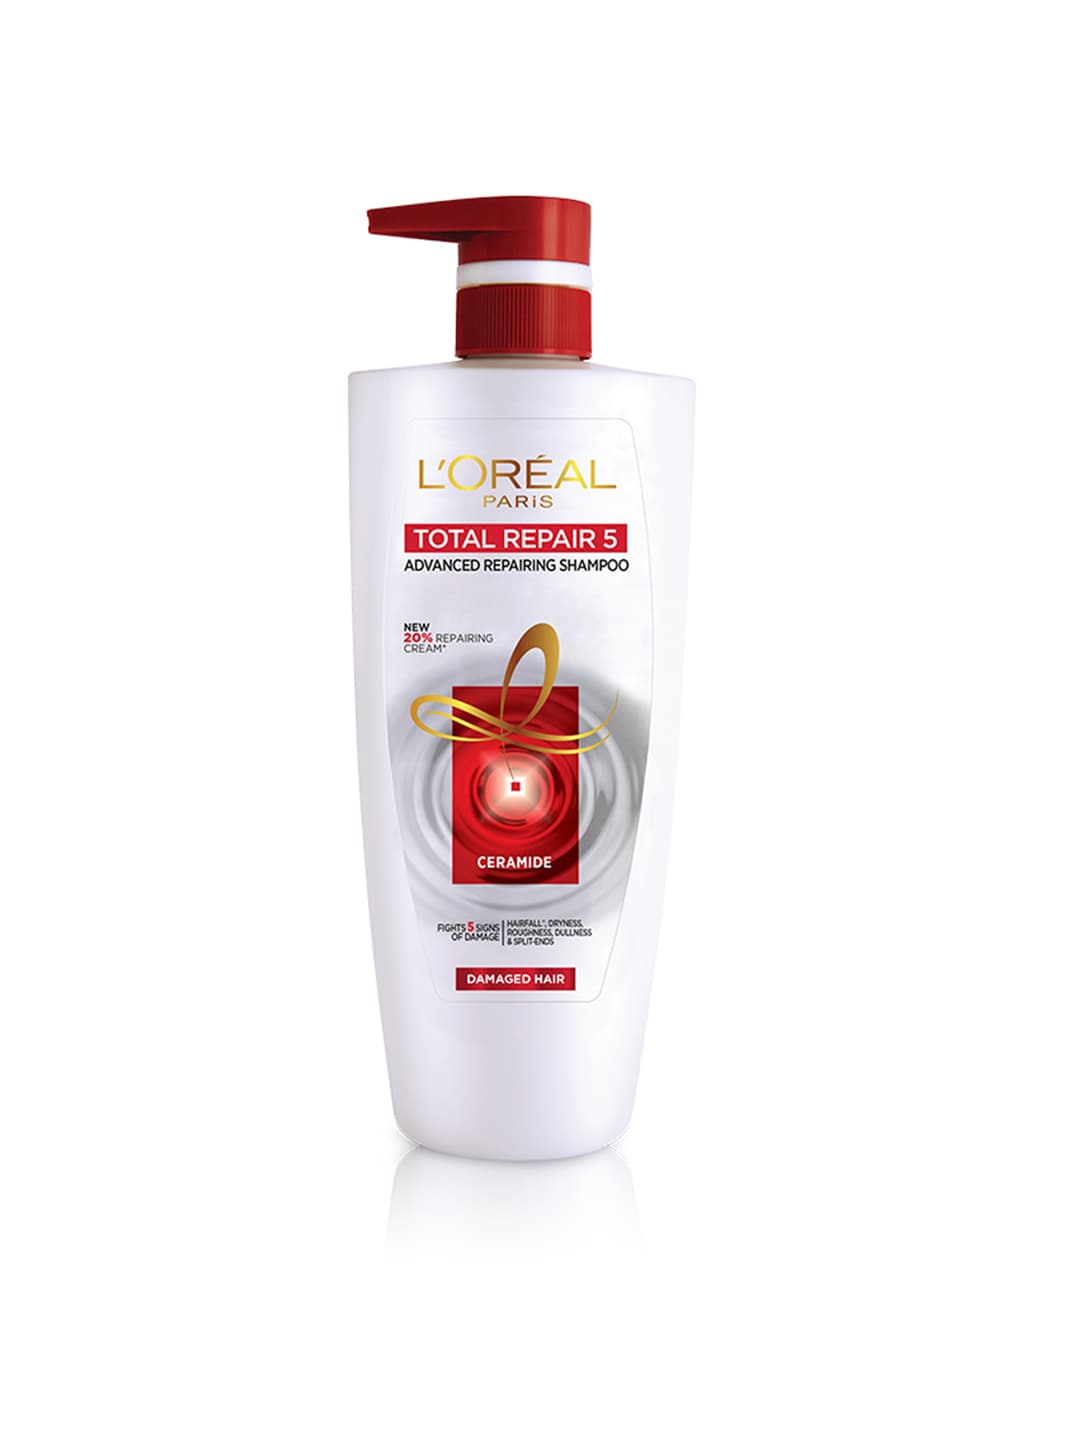 LOreal Paris Total Repair 5 Shampoo with Ceramide for Damaged Hair - 704ml Price in India